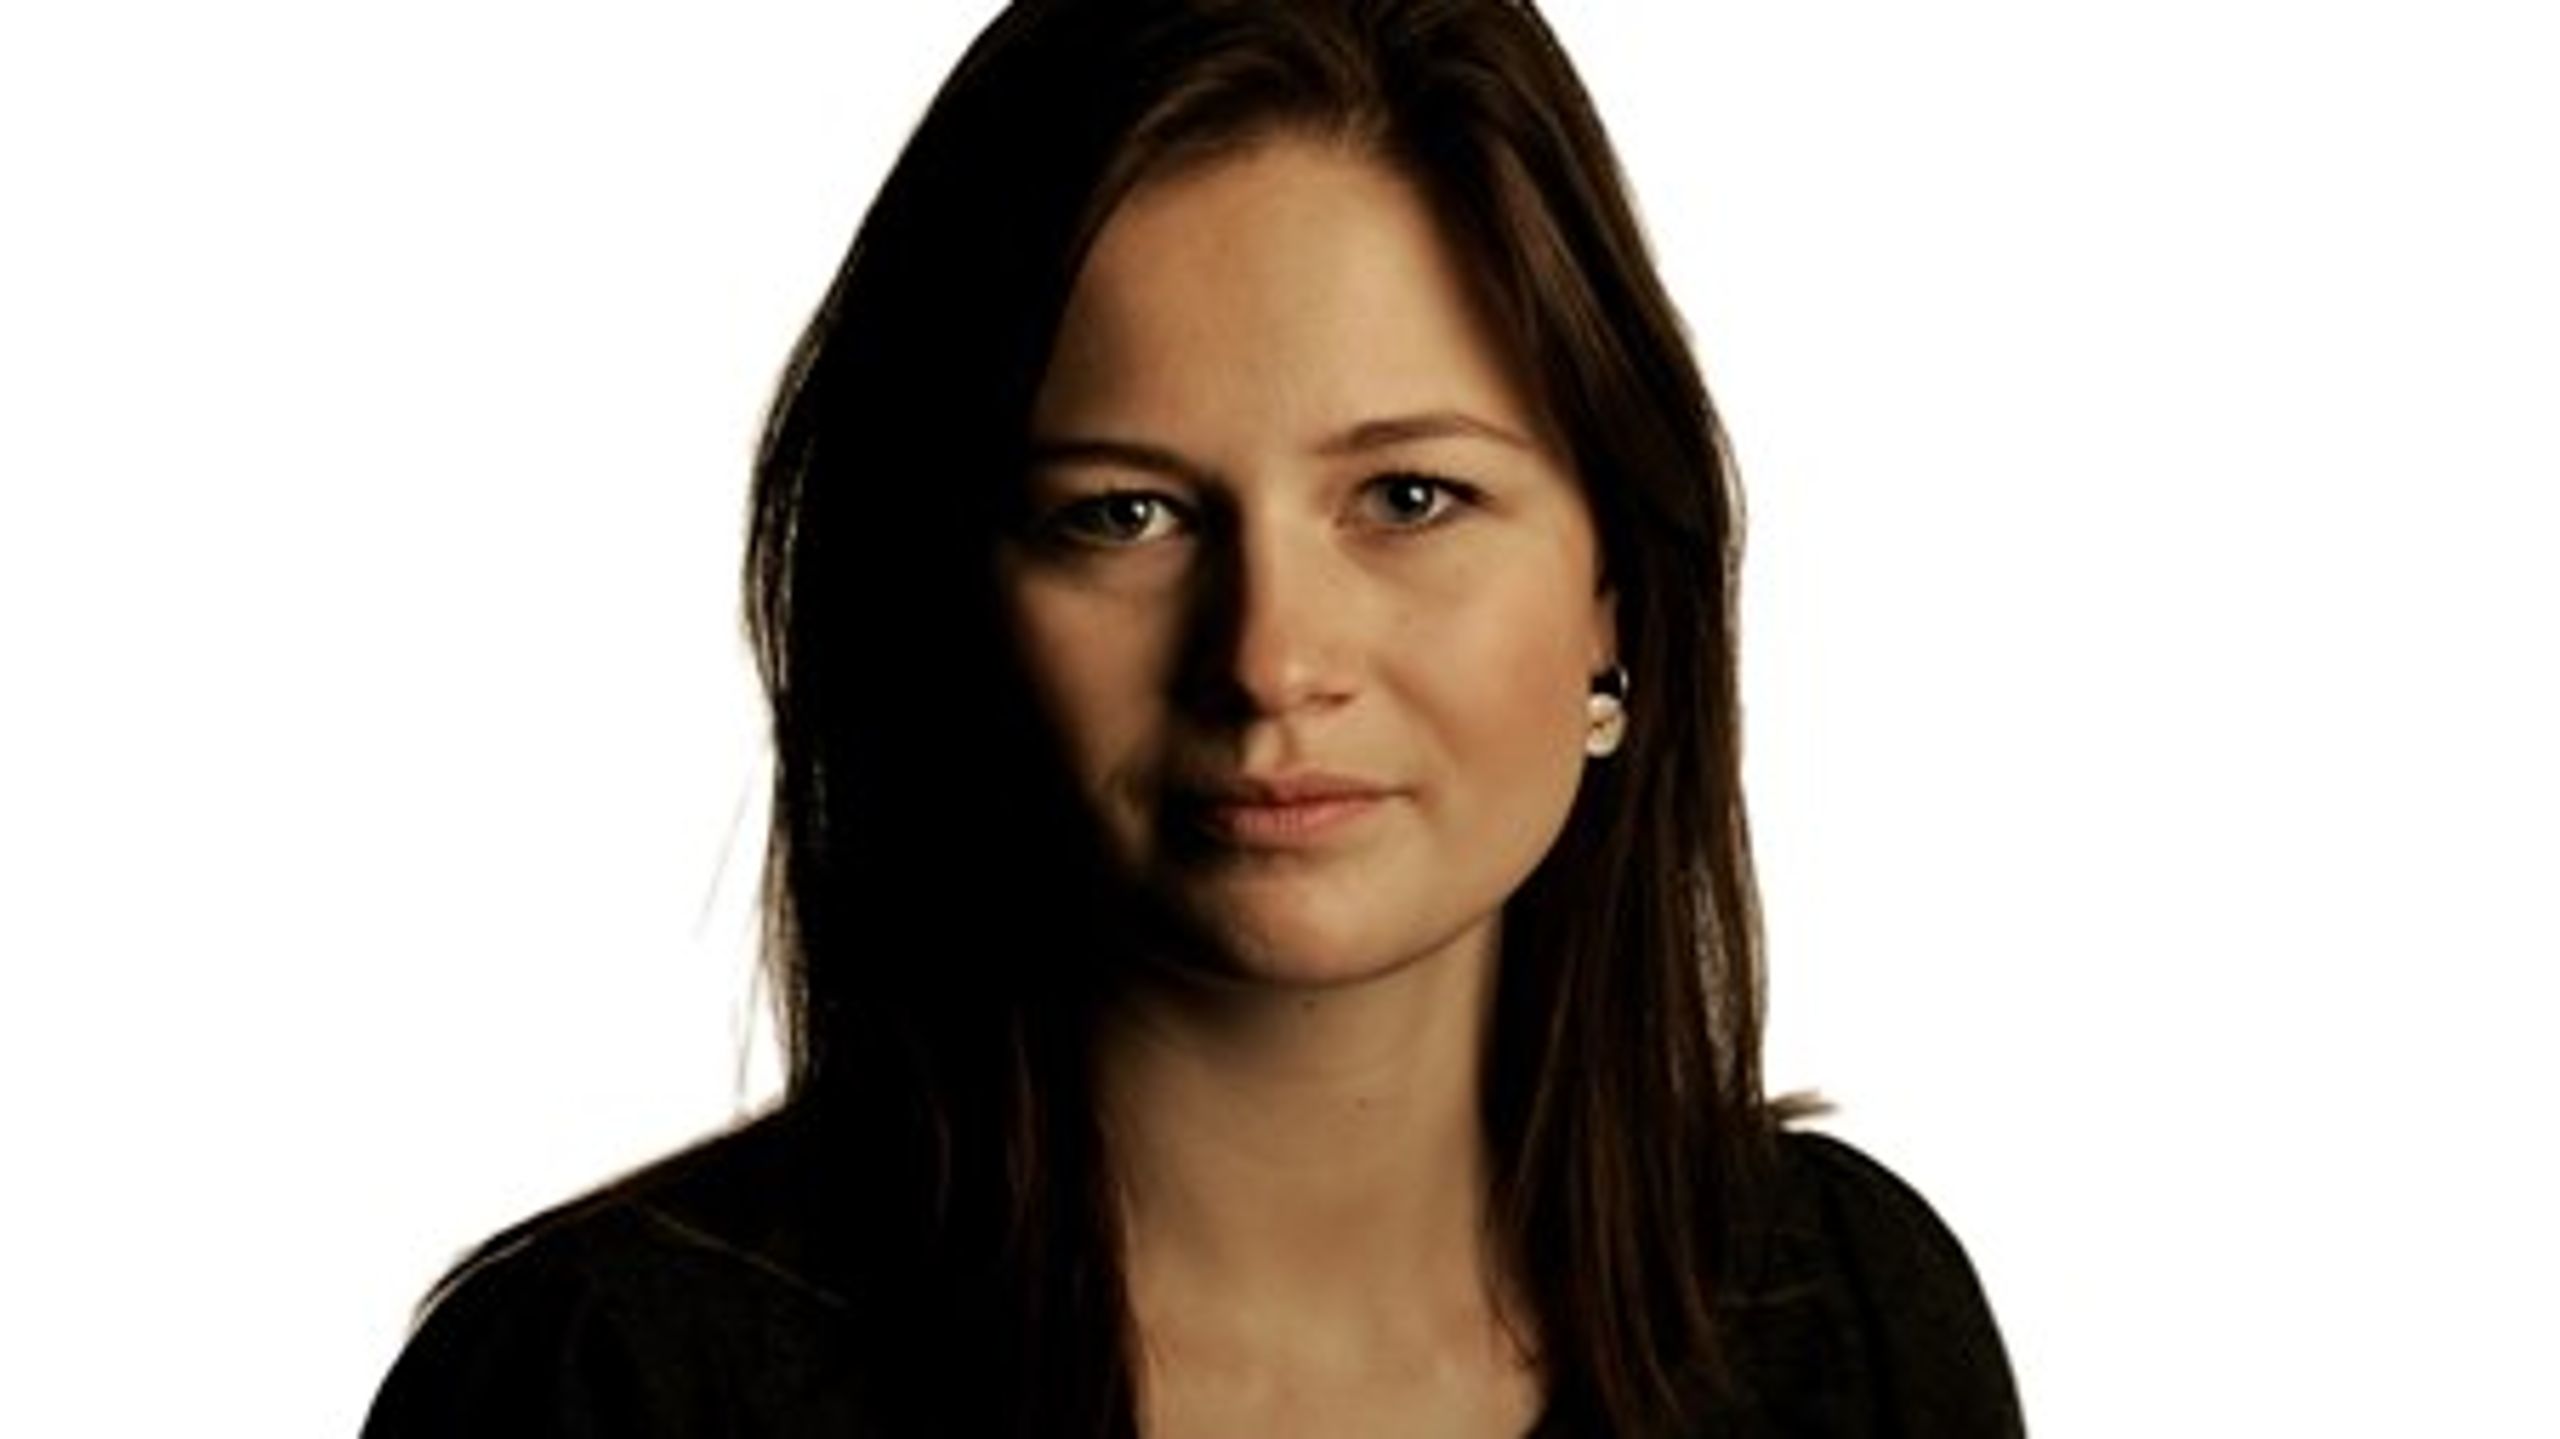 Politikens politiske redaktør Mette Østergaard bliver ny chef for TV 2 News.